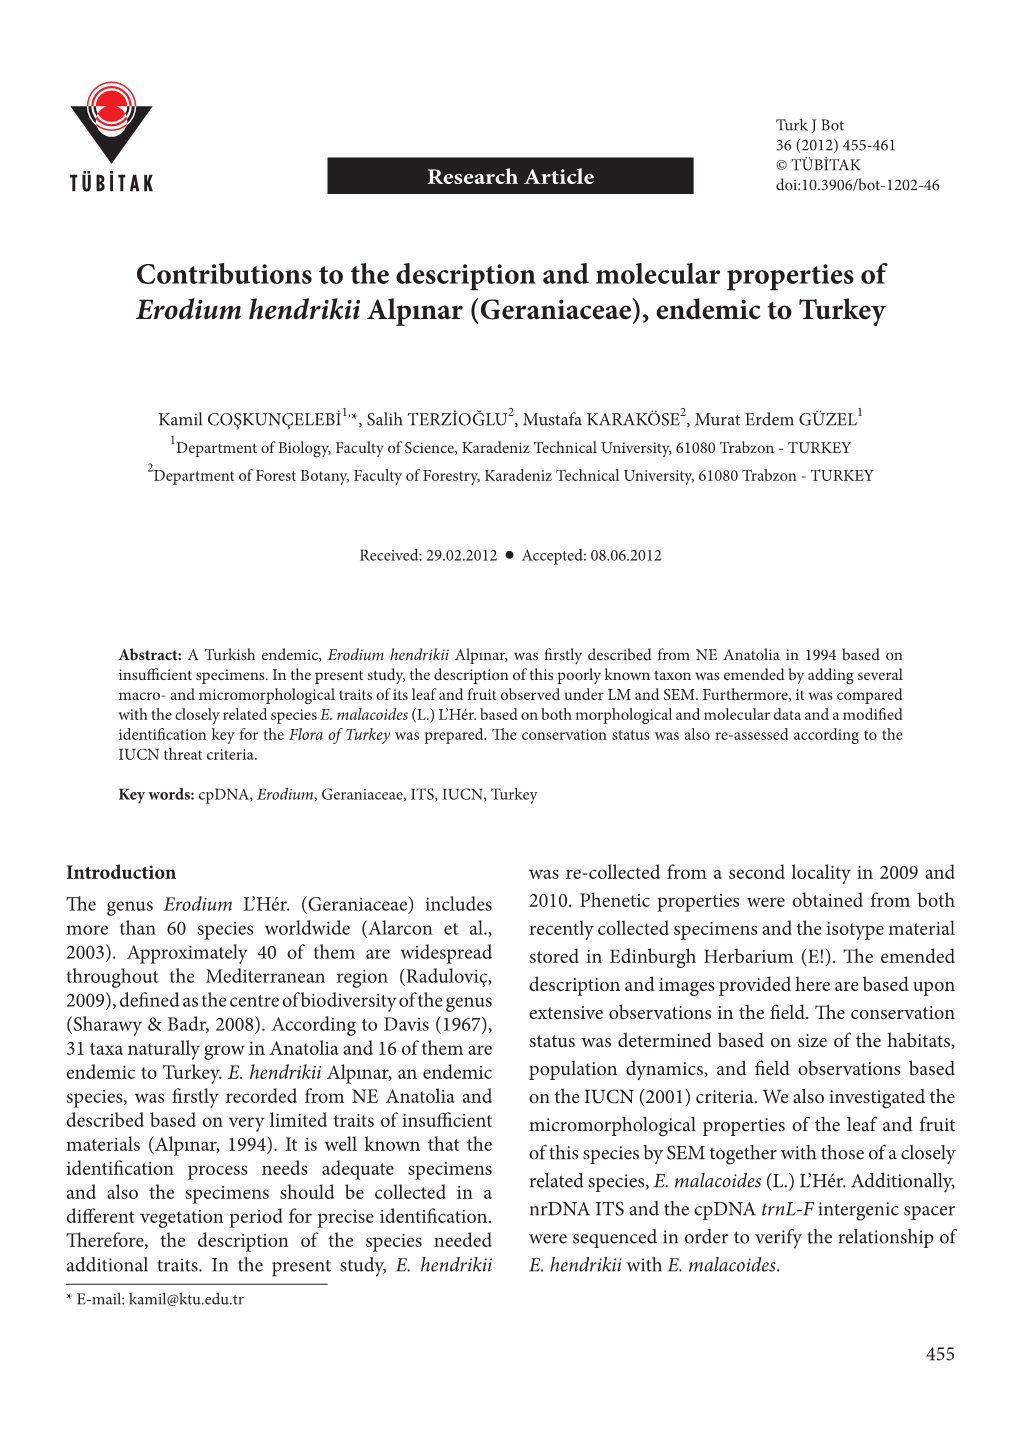 Contributions to the Description and Molecular Properties of Erodium Hendrikii Alpınar (Geraniaceae), Endemic to Turkey